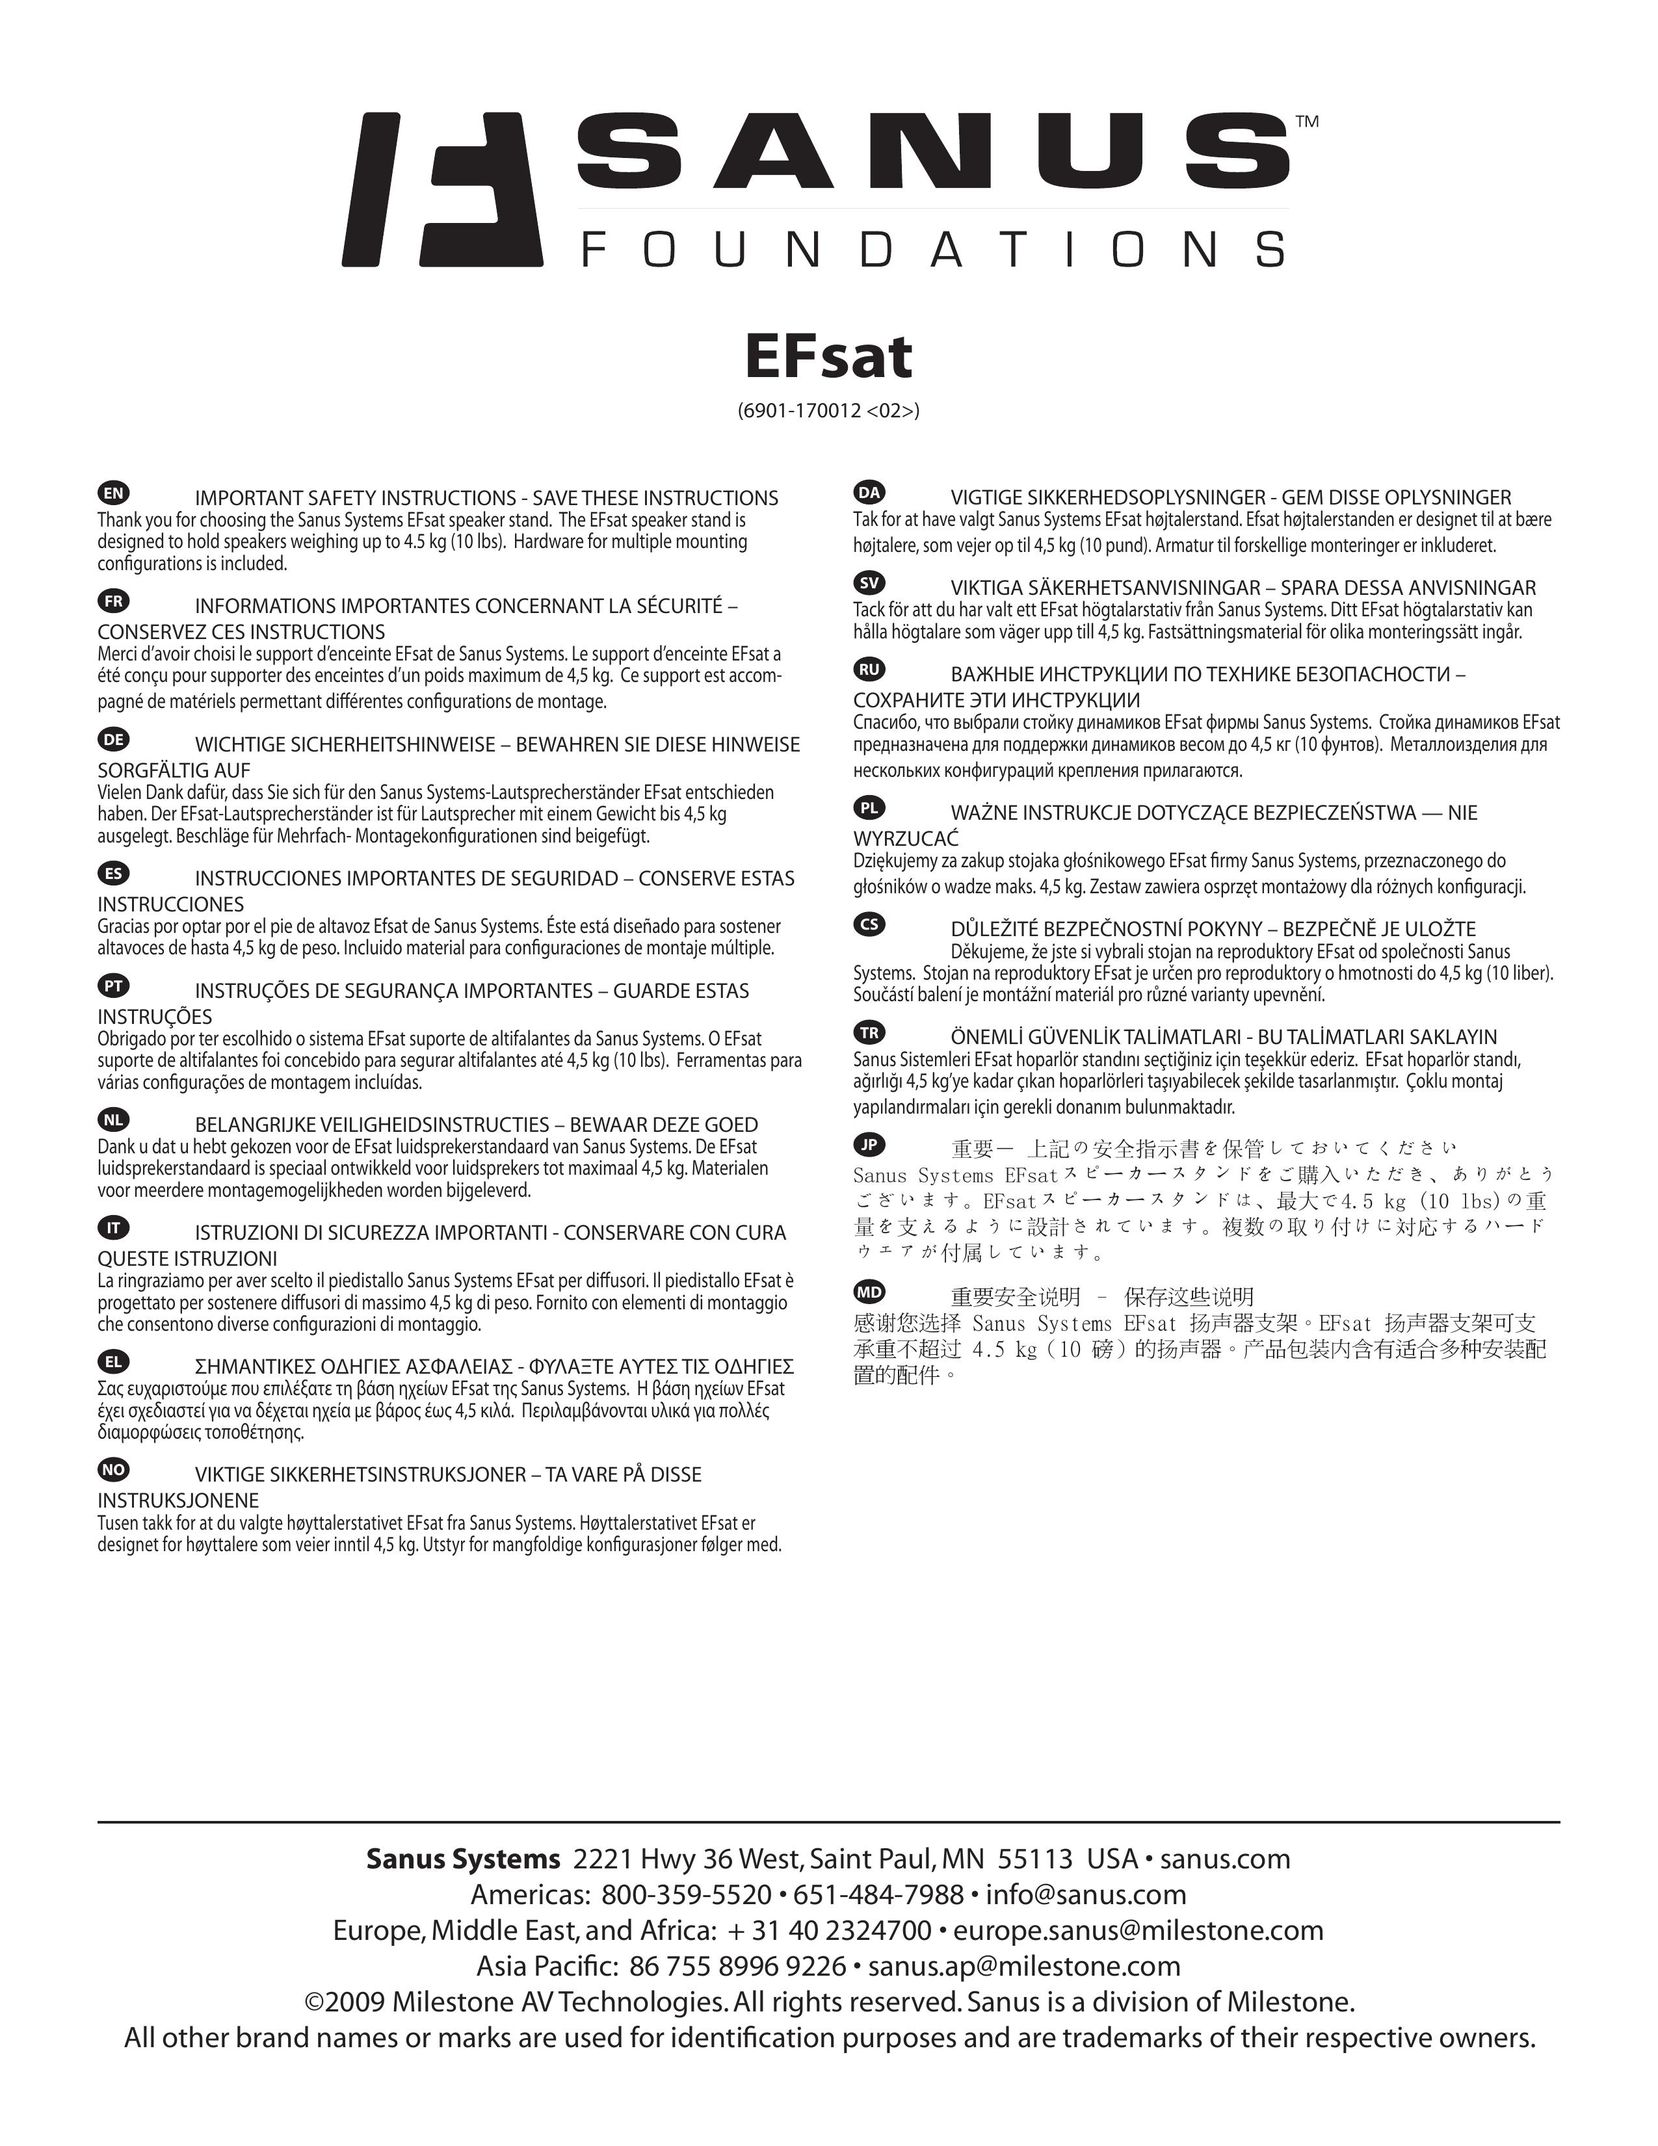 Sanus Systems EFSat Indoor Furnishings User Manual